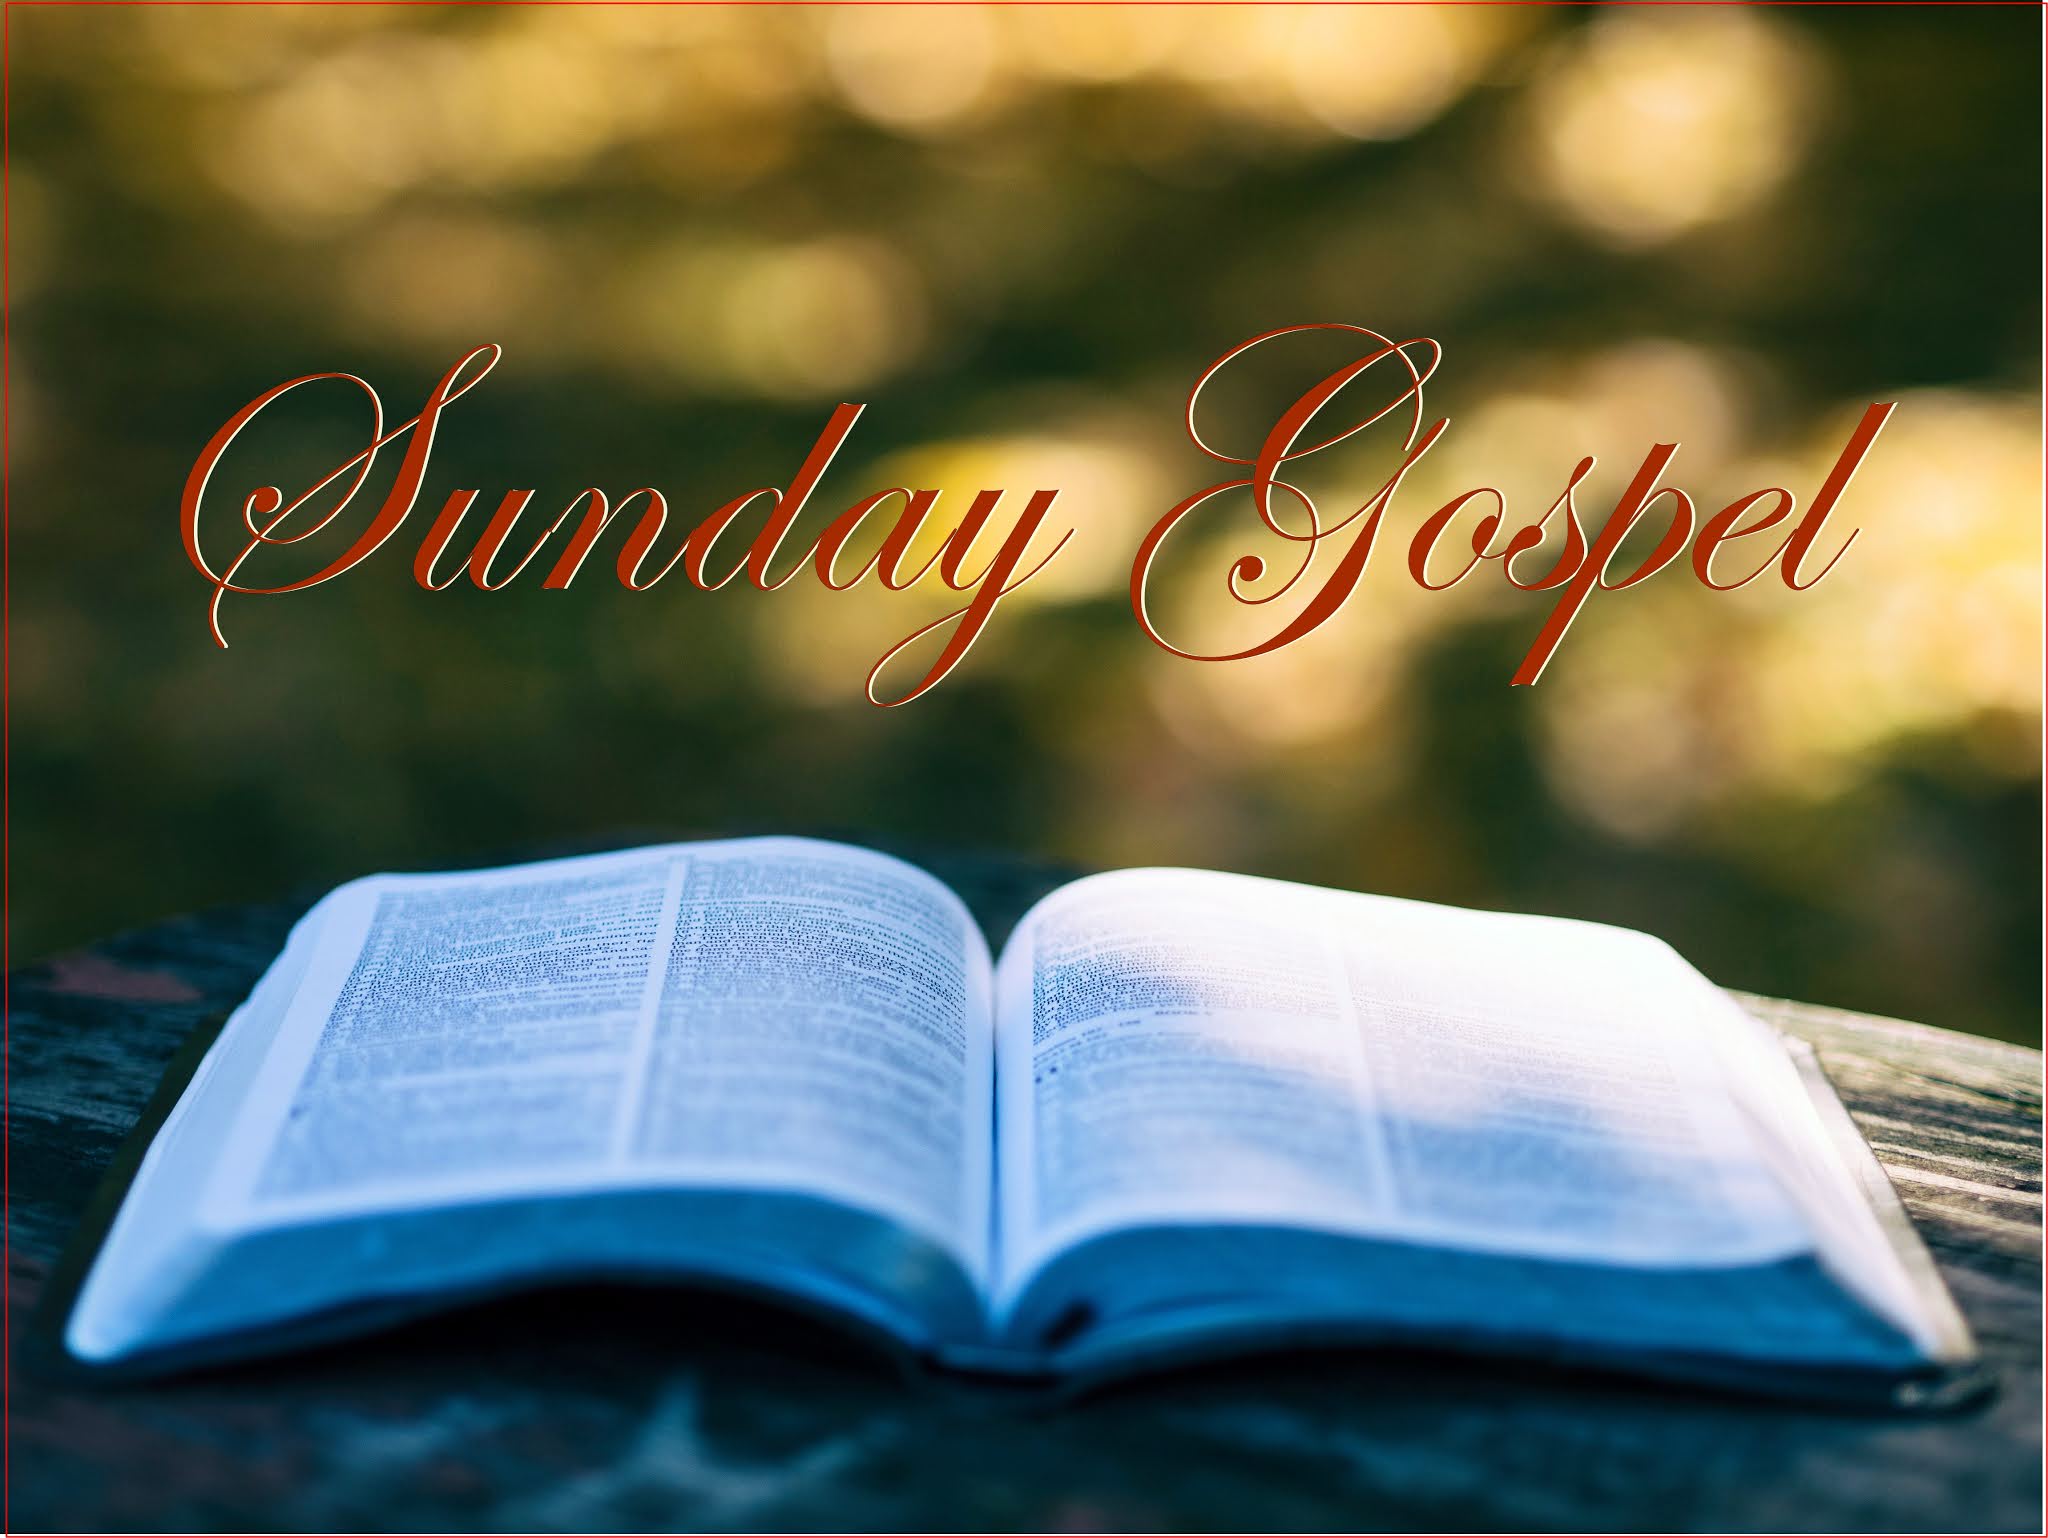 Sunday Gospel Readings March 7, 2021 3RD SUNDAY OF LENT (B)